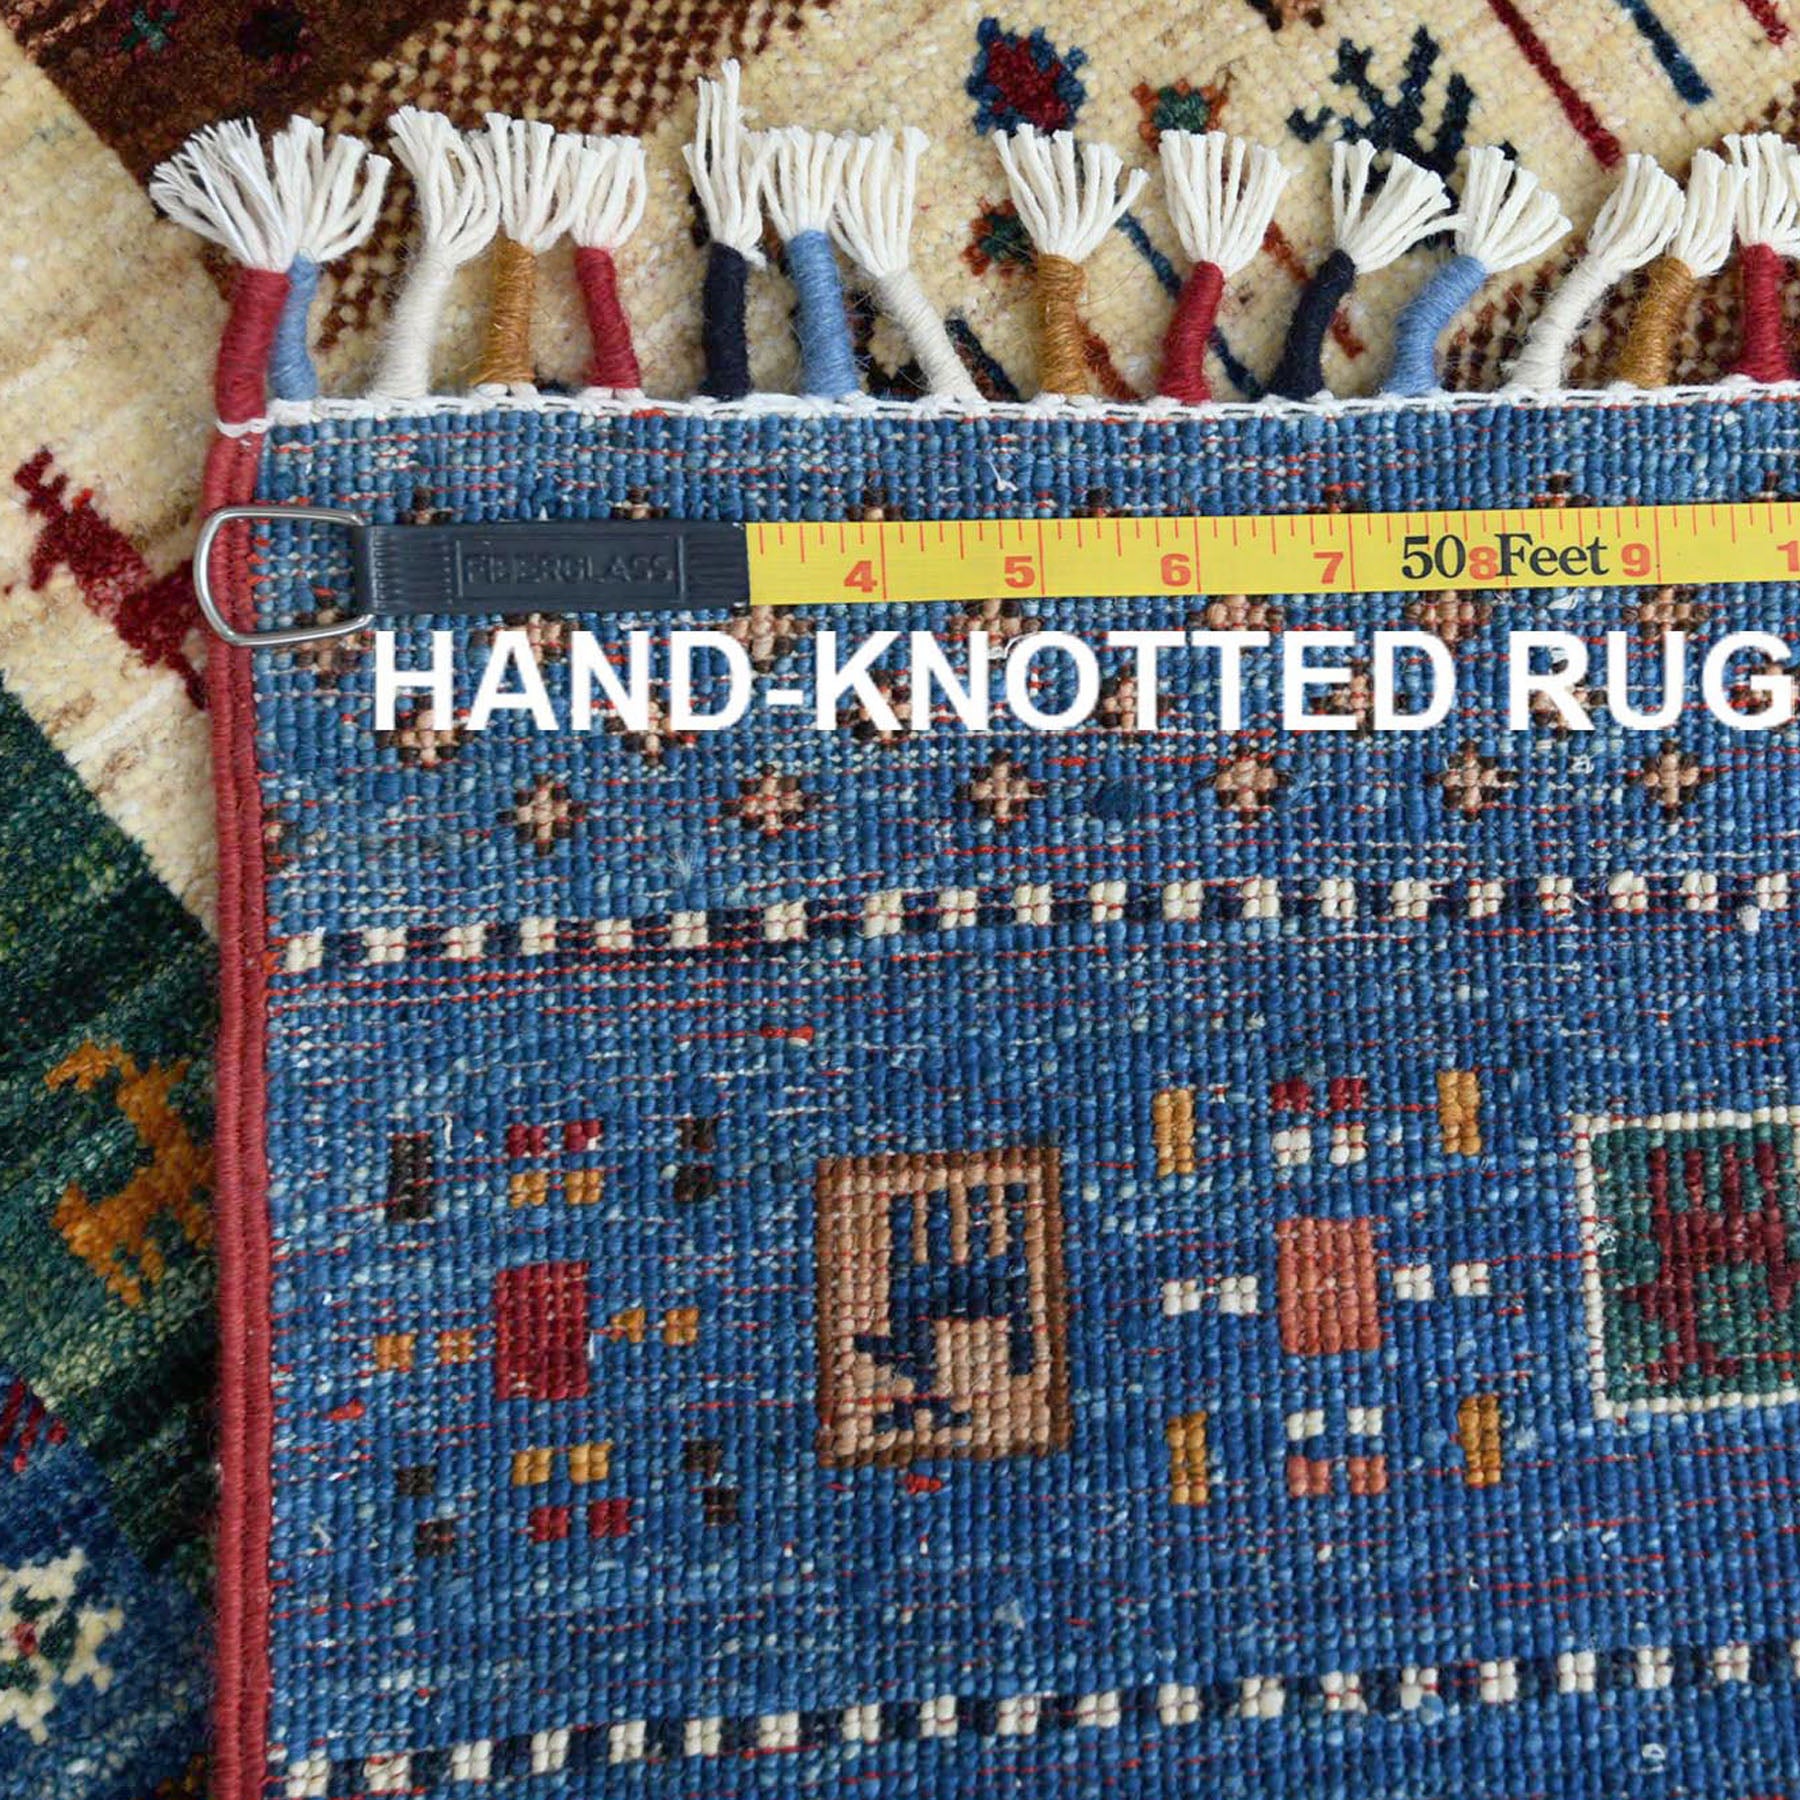 Geometric Modern Oriental Gabbeh Kashkoli Wool Area Rug Hand Knotted